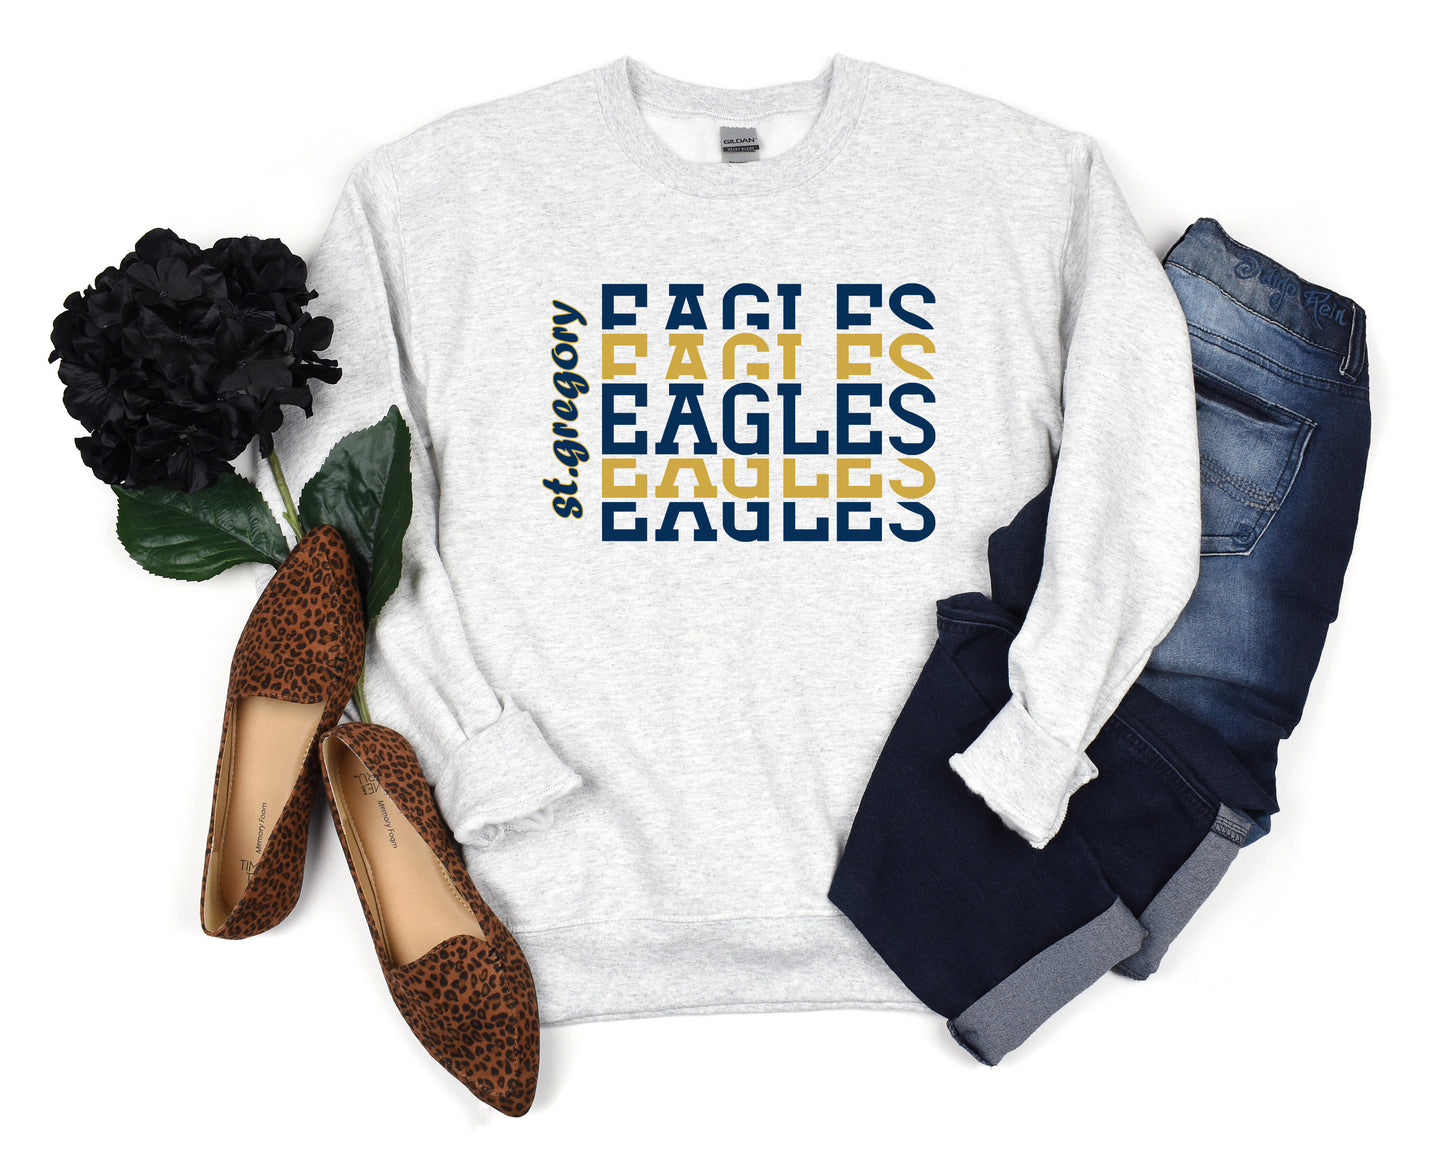 St. Gregory Eagles crewneck sweatshirt